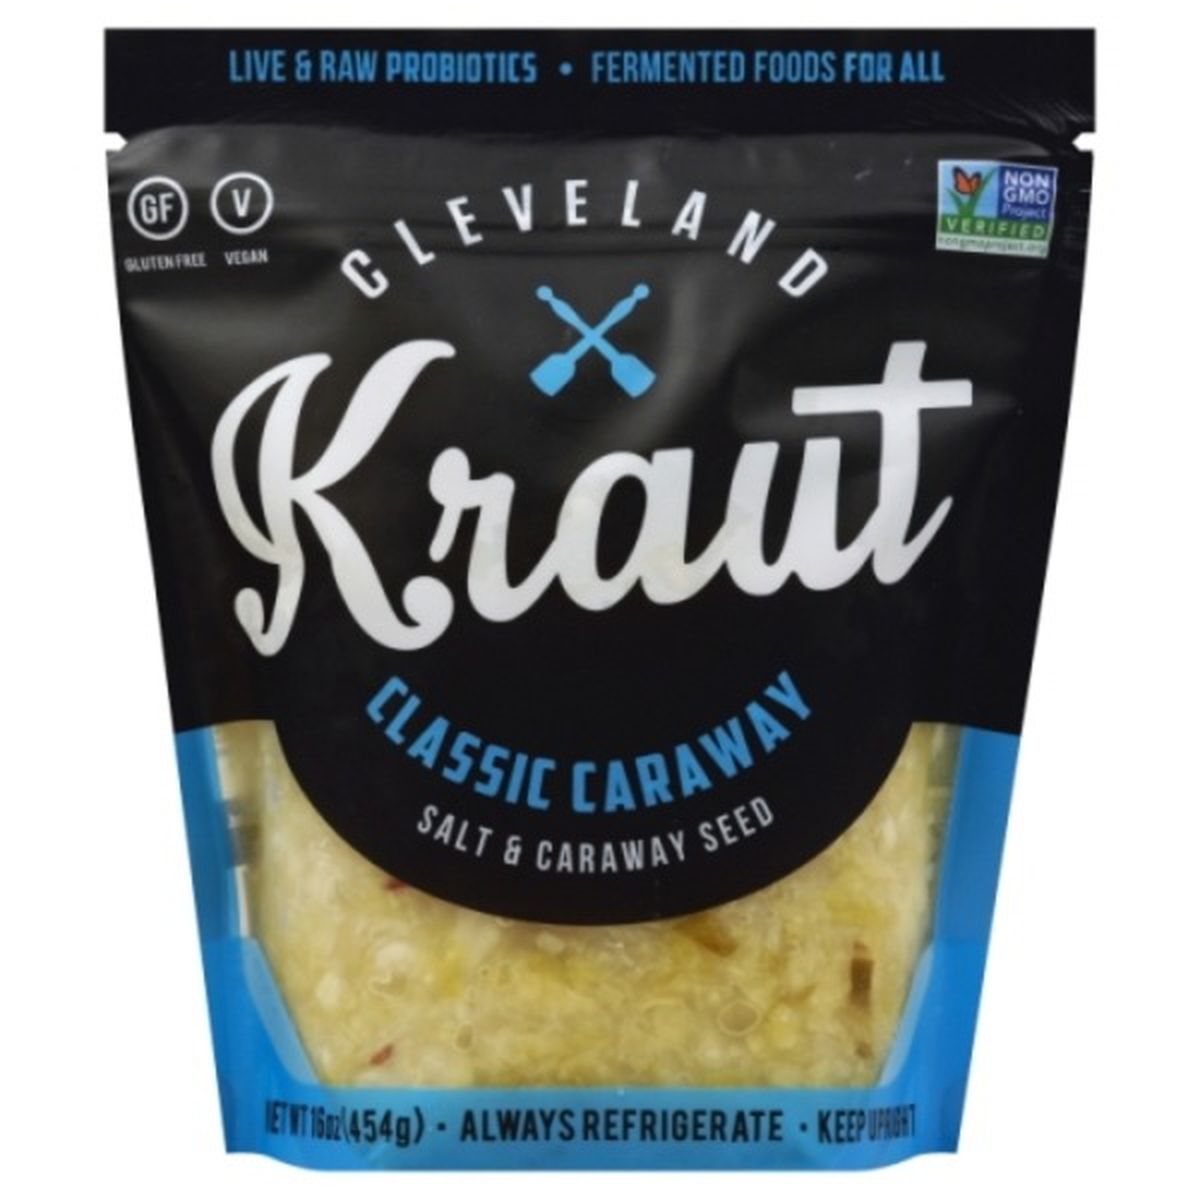 Calories in Cleveland Kraut Kraut, Classic Caraway